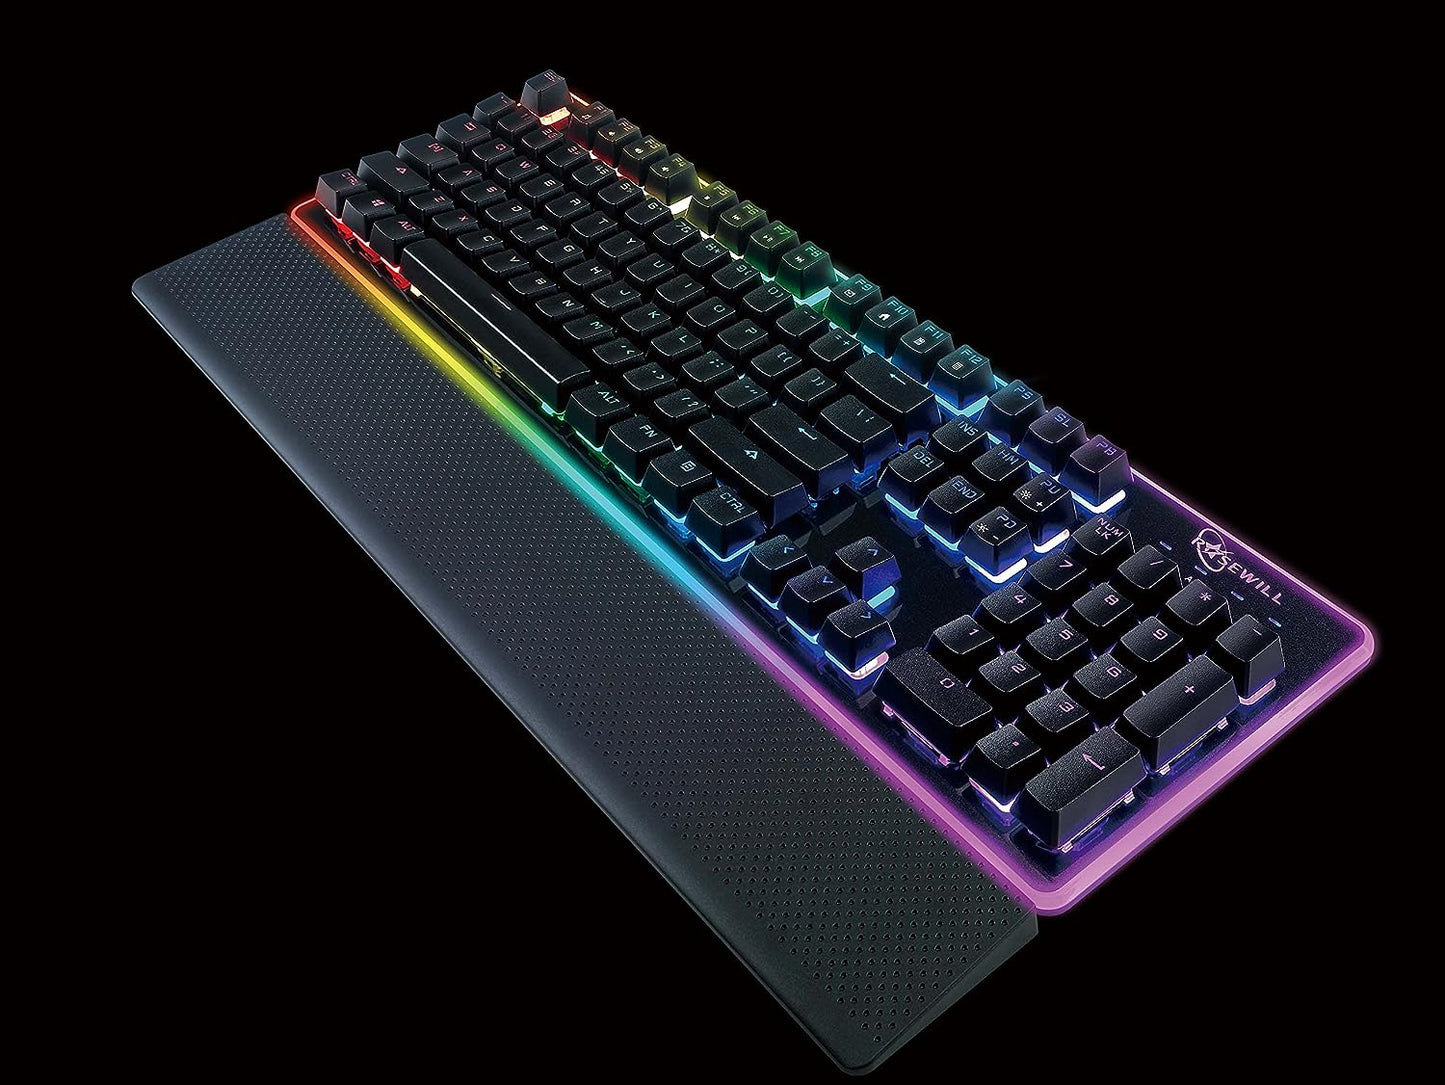 ROSEWILL Gaming Keyboard Model K51, Chroma RGB LED Backlit Wired Membrane Mechanical